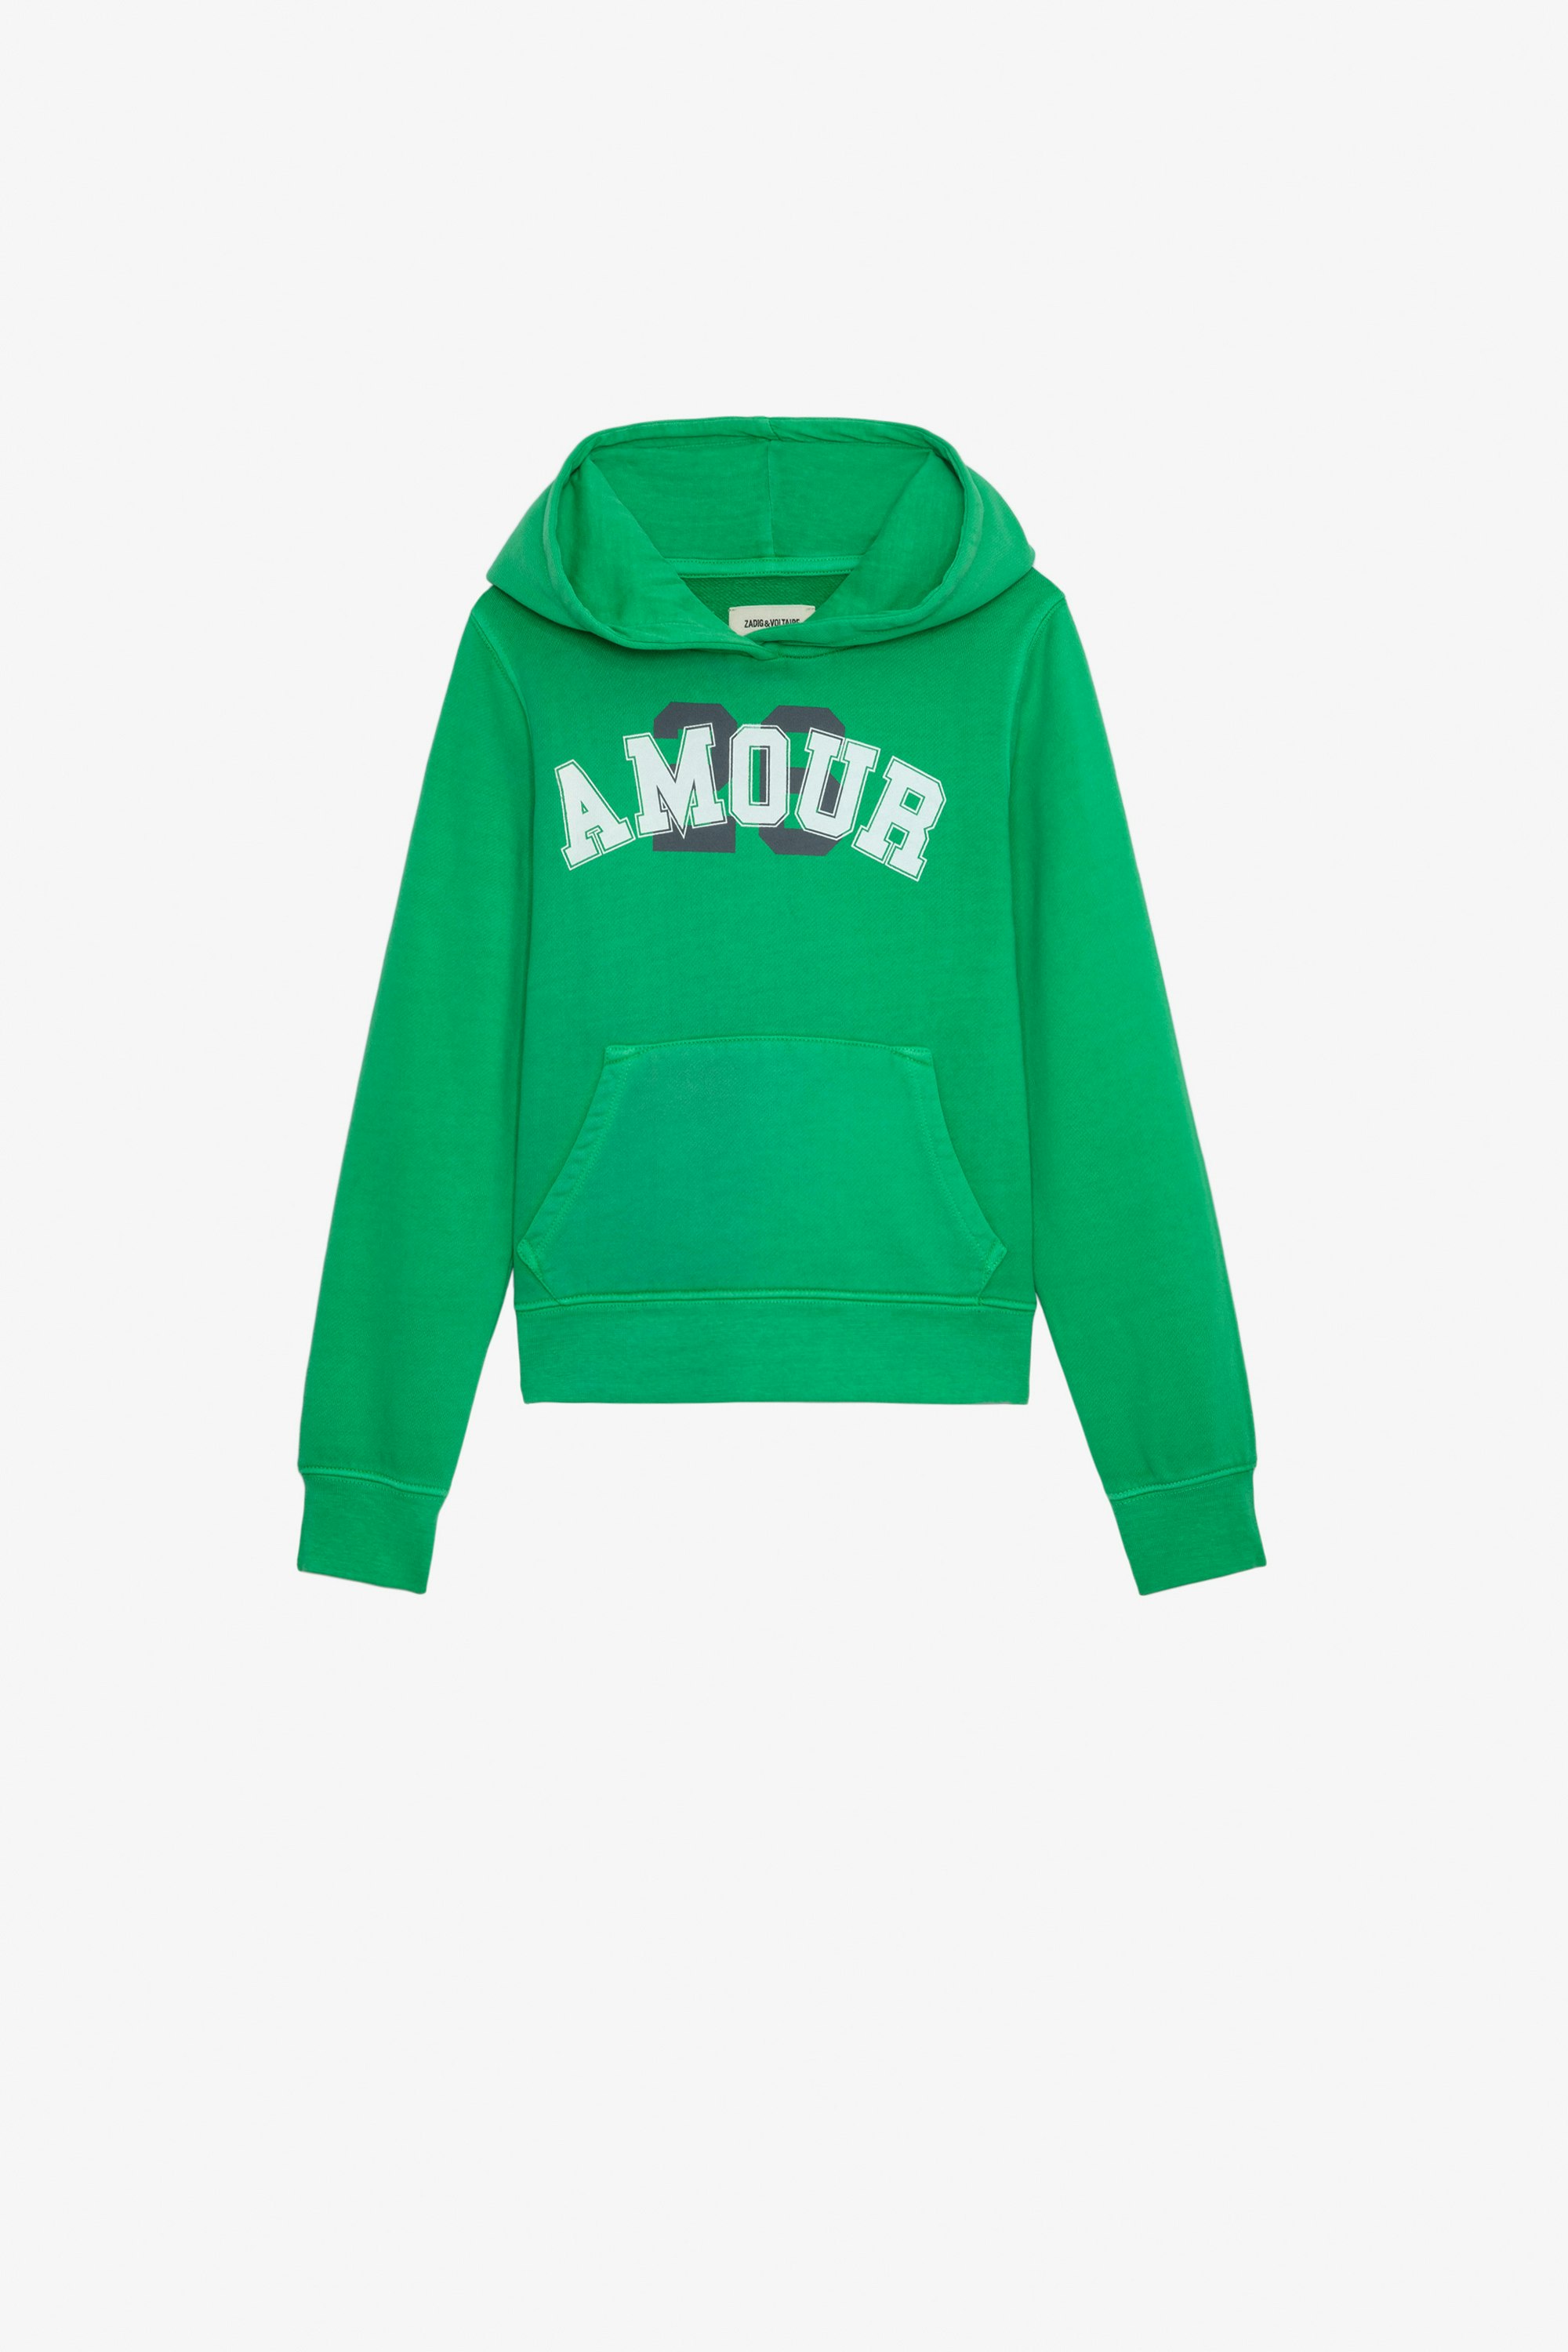 Spencer Girls’ Sweatshirt Girls’ green cotton fleece hoodie with “Amour” slogan.